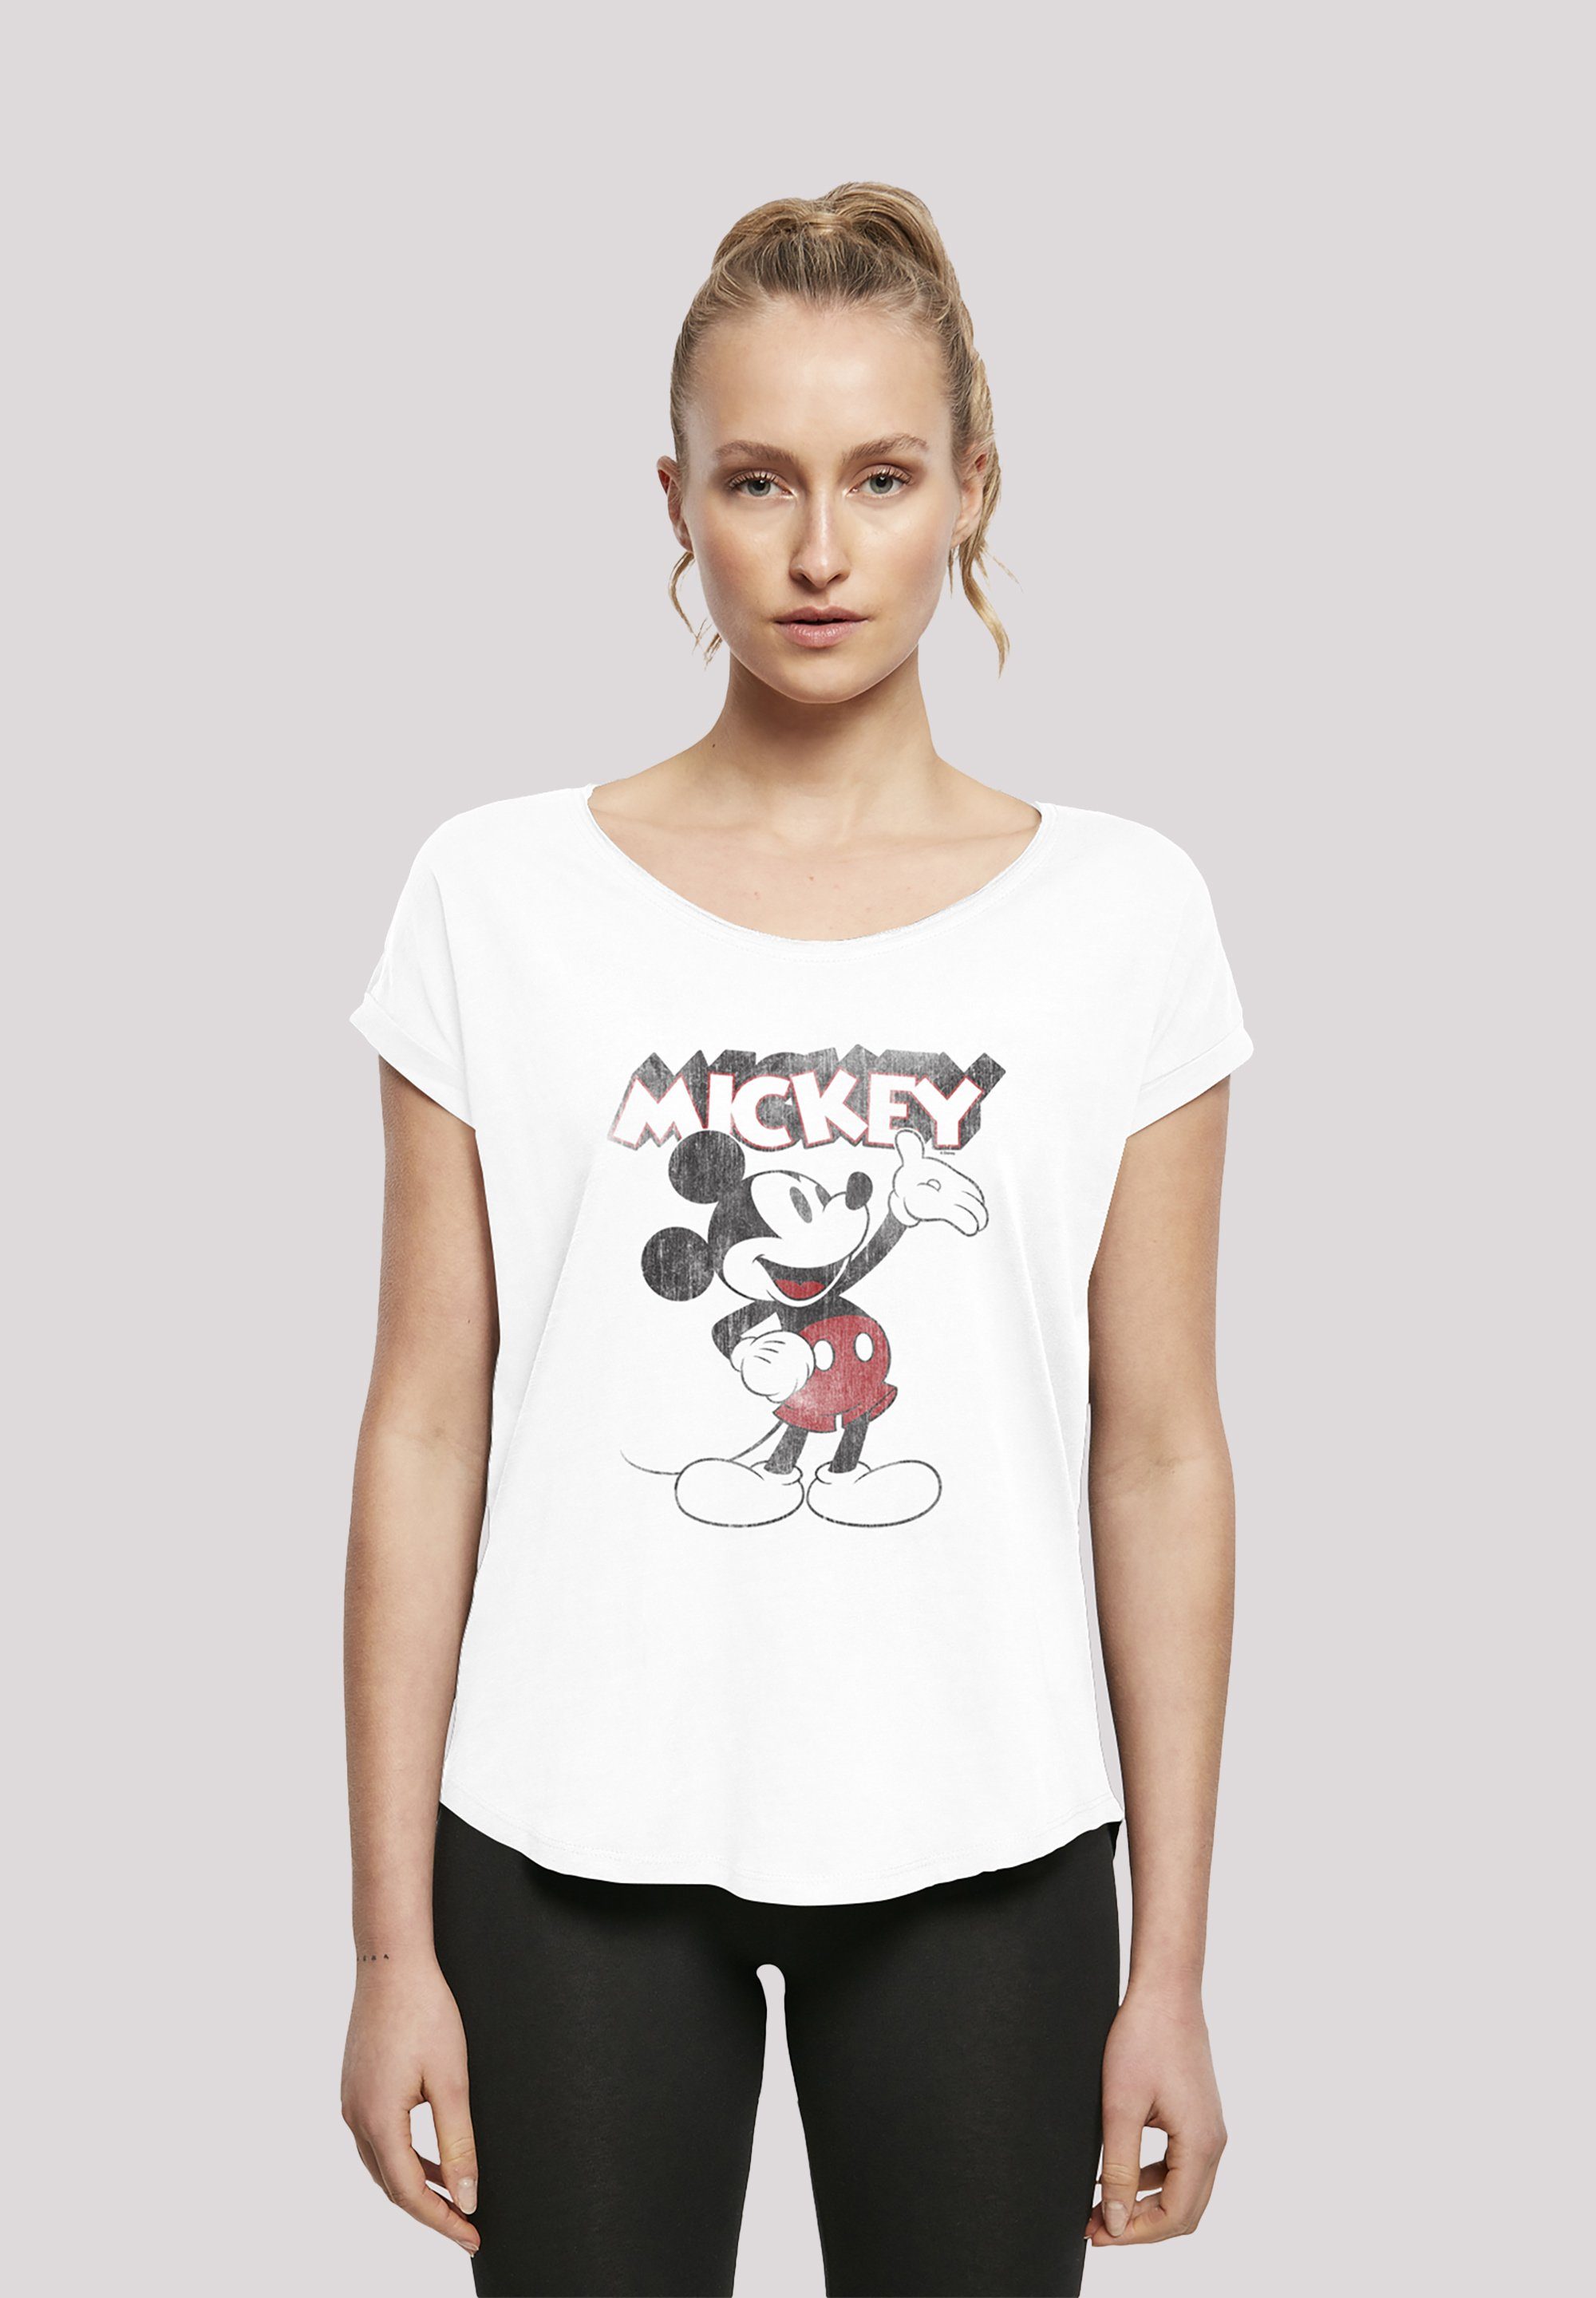 F4NT4STIC T-Shirt Disney Micky Maus Presents Film Movie TV Comic